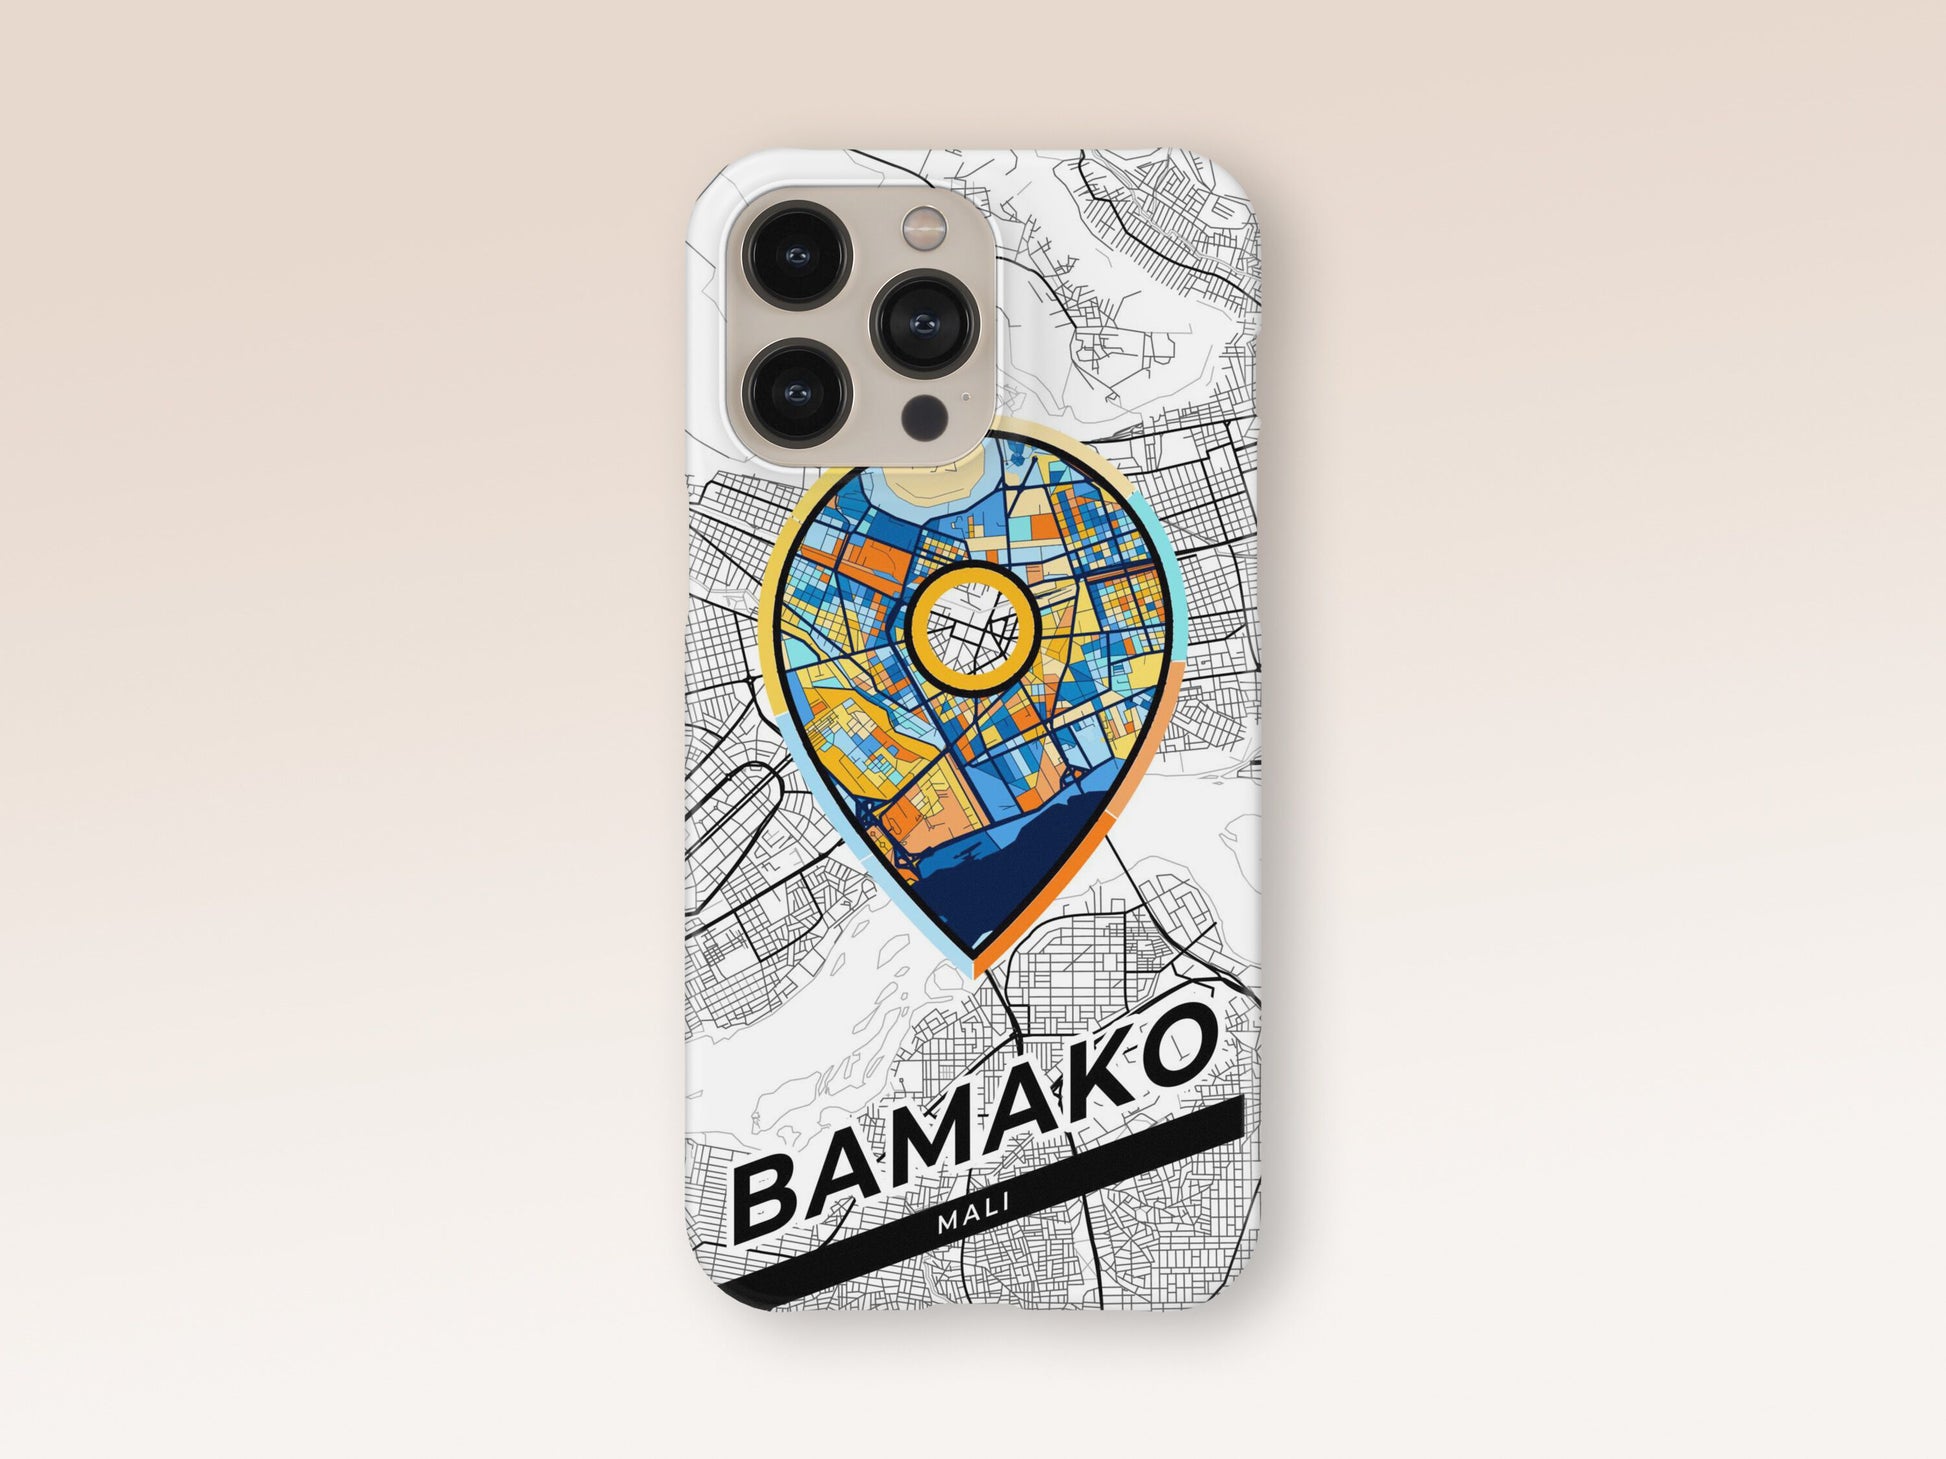 Bamako Mali slim phone case with colorful icon. Birthday, wedding or housewarming gift. Couple match cases. 1